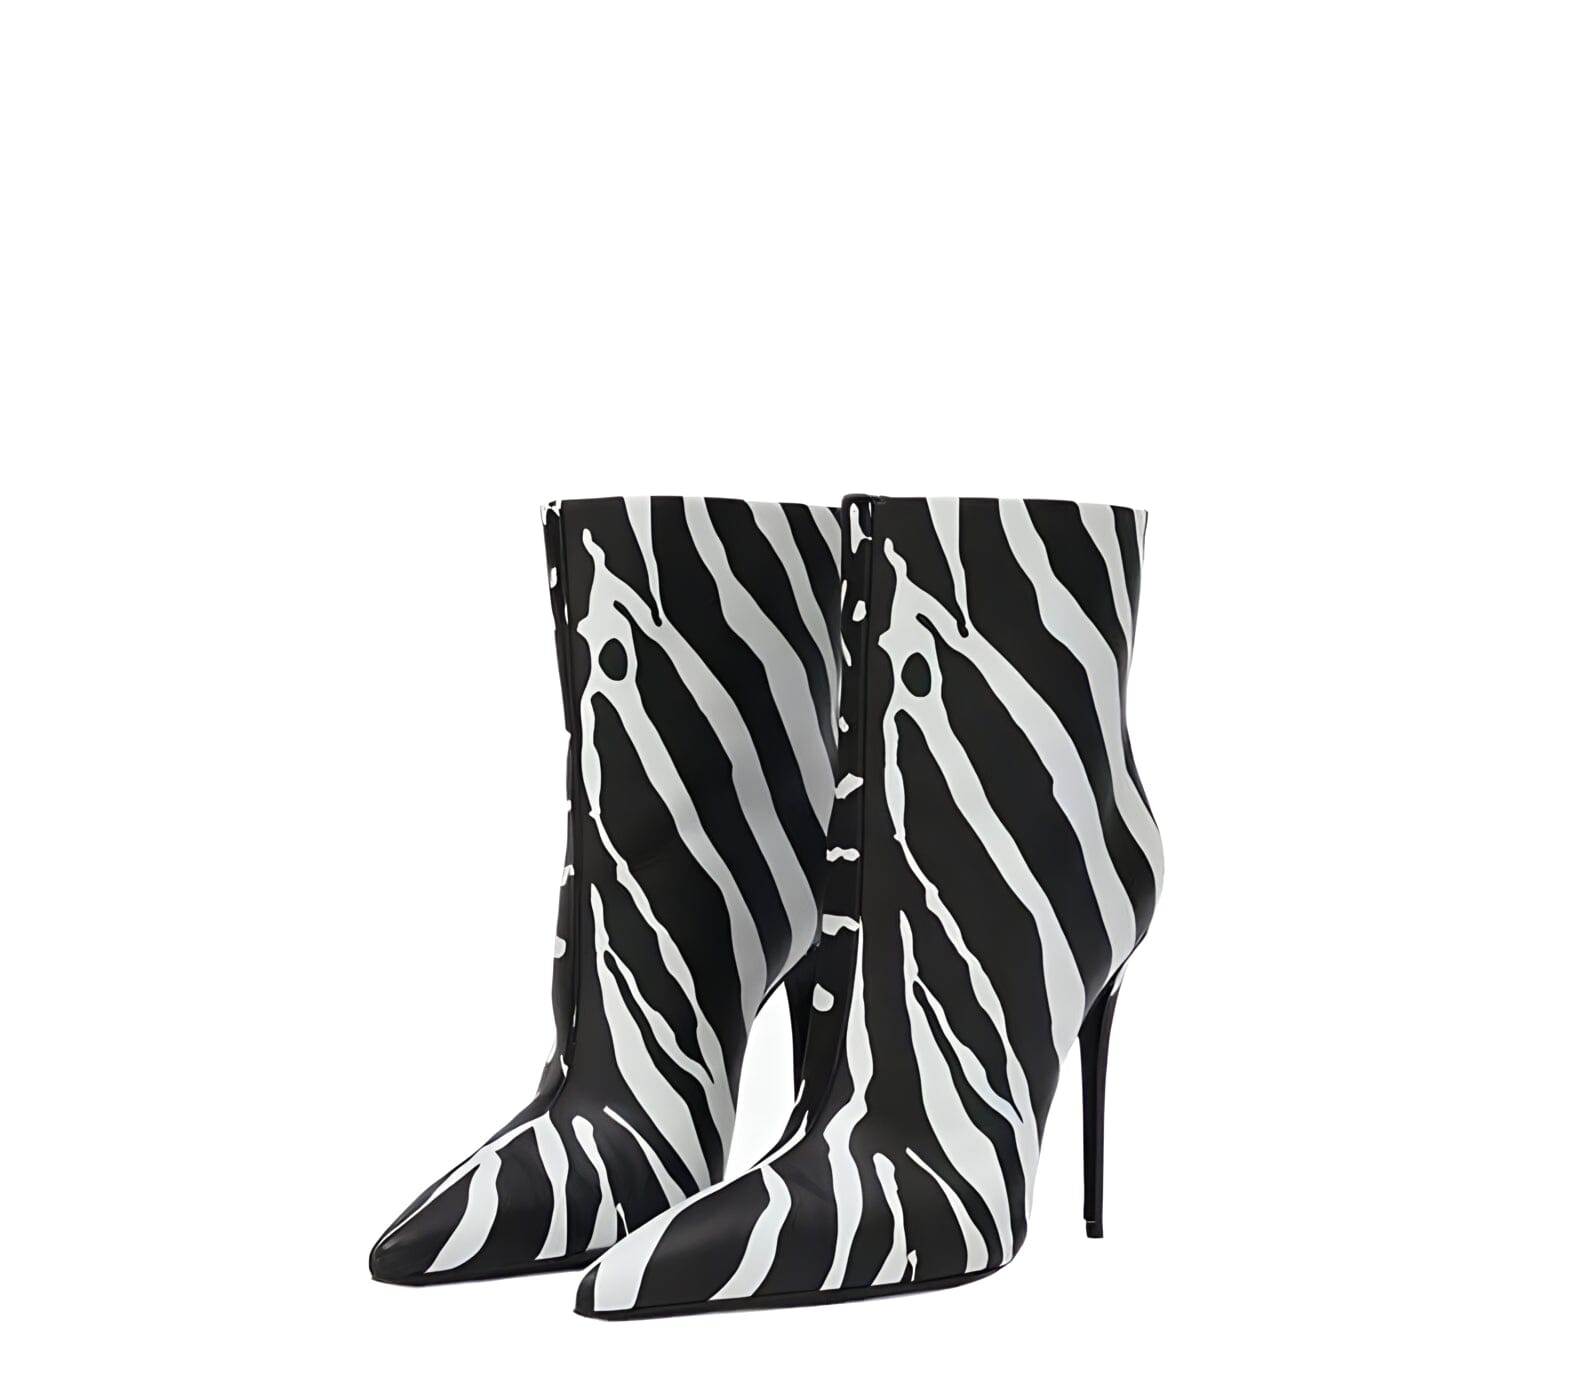 The Zebra High-Heel Ankle Boots 0 SA Styles EU 34 / US 4.5 